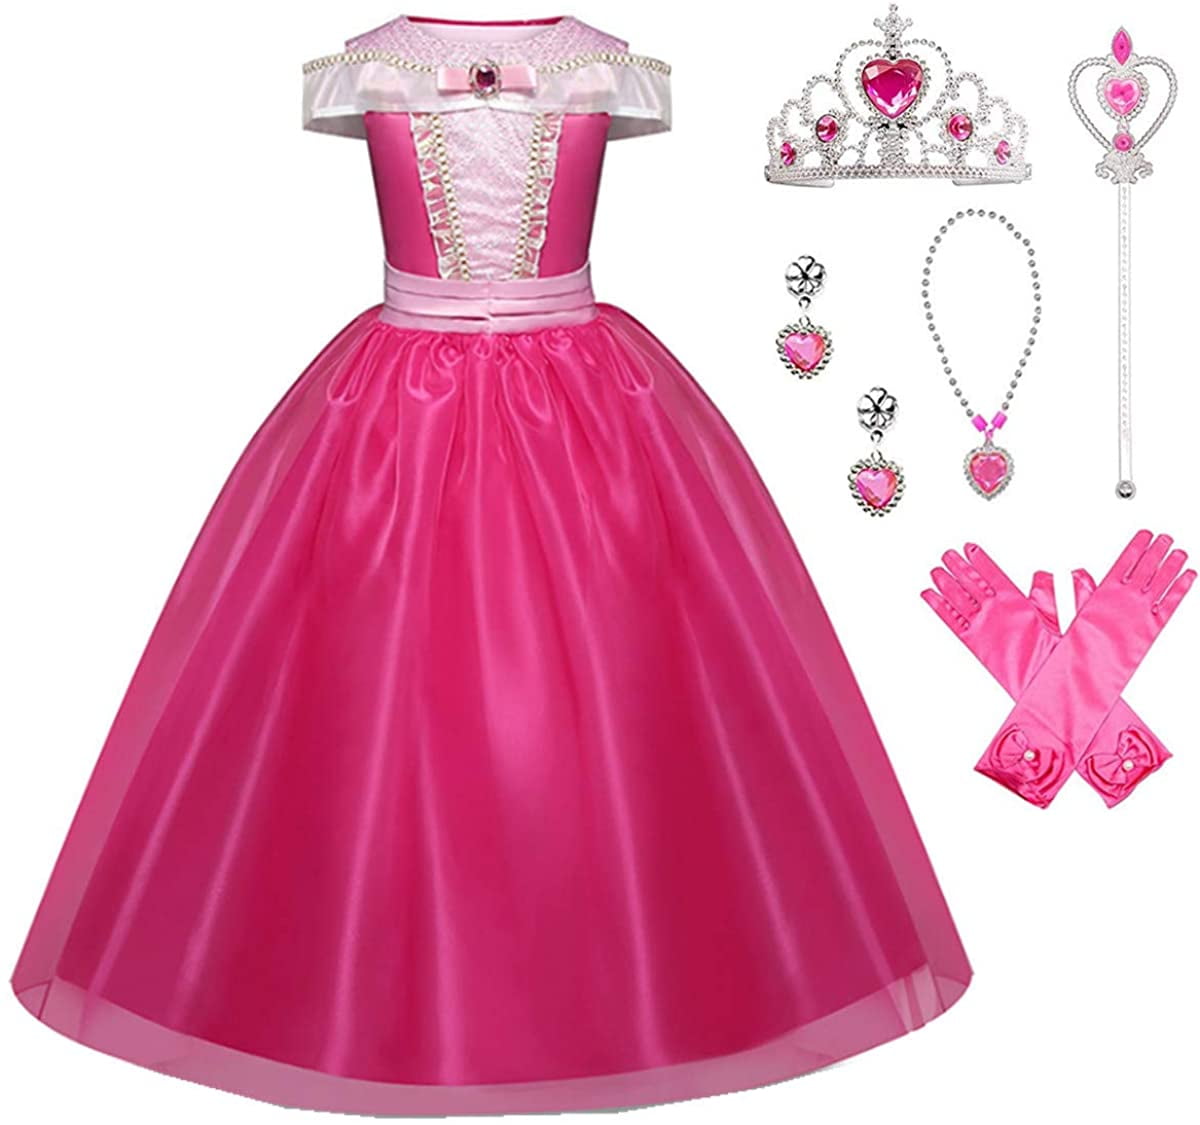 NEW BEAUTIFUL Cosplay Princess Aurora Sleeping Beauty Fancy Dress Costume